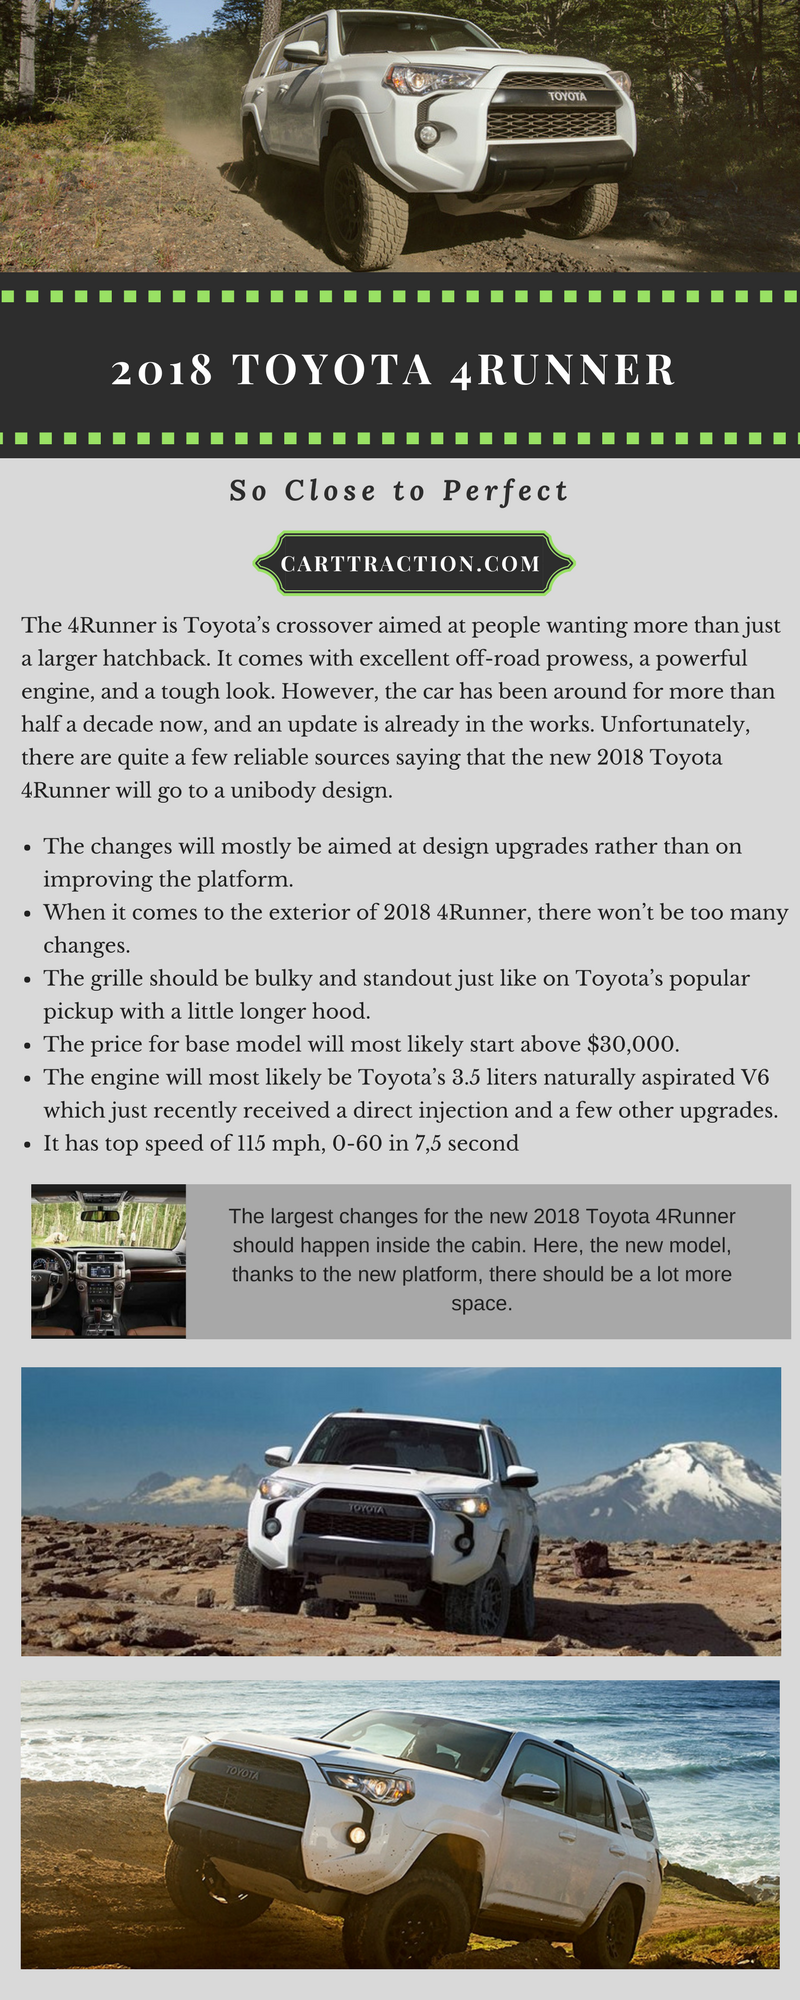 Copy of 2018 Toyota 4runner3